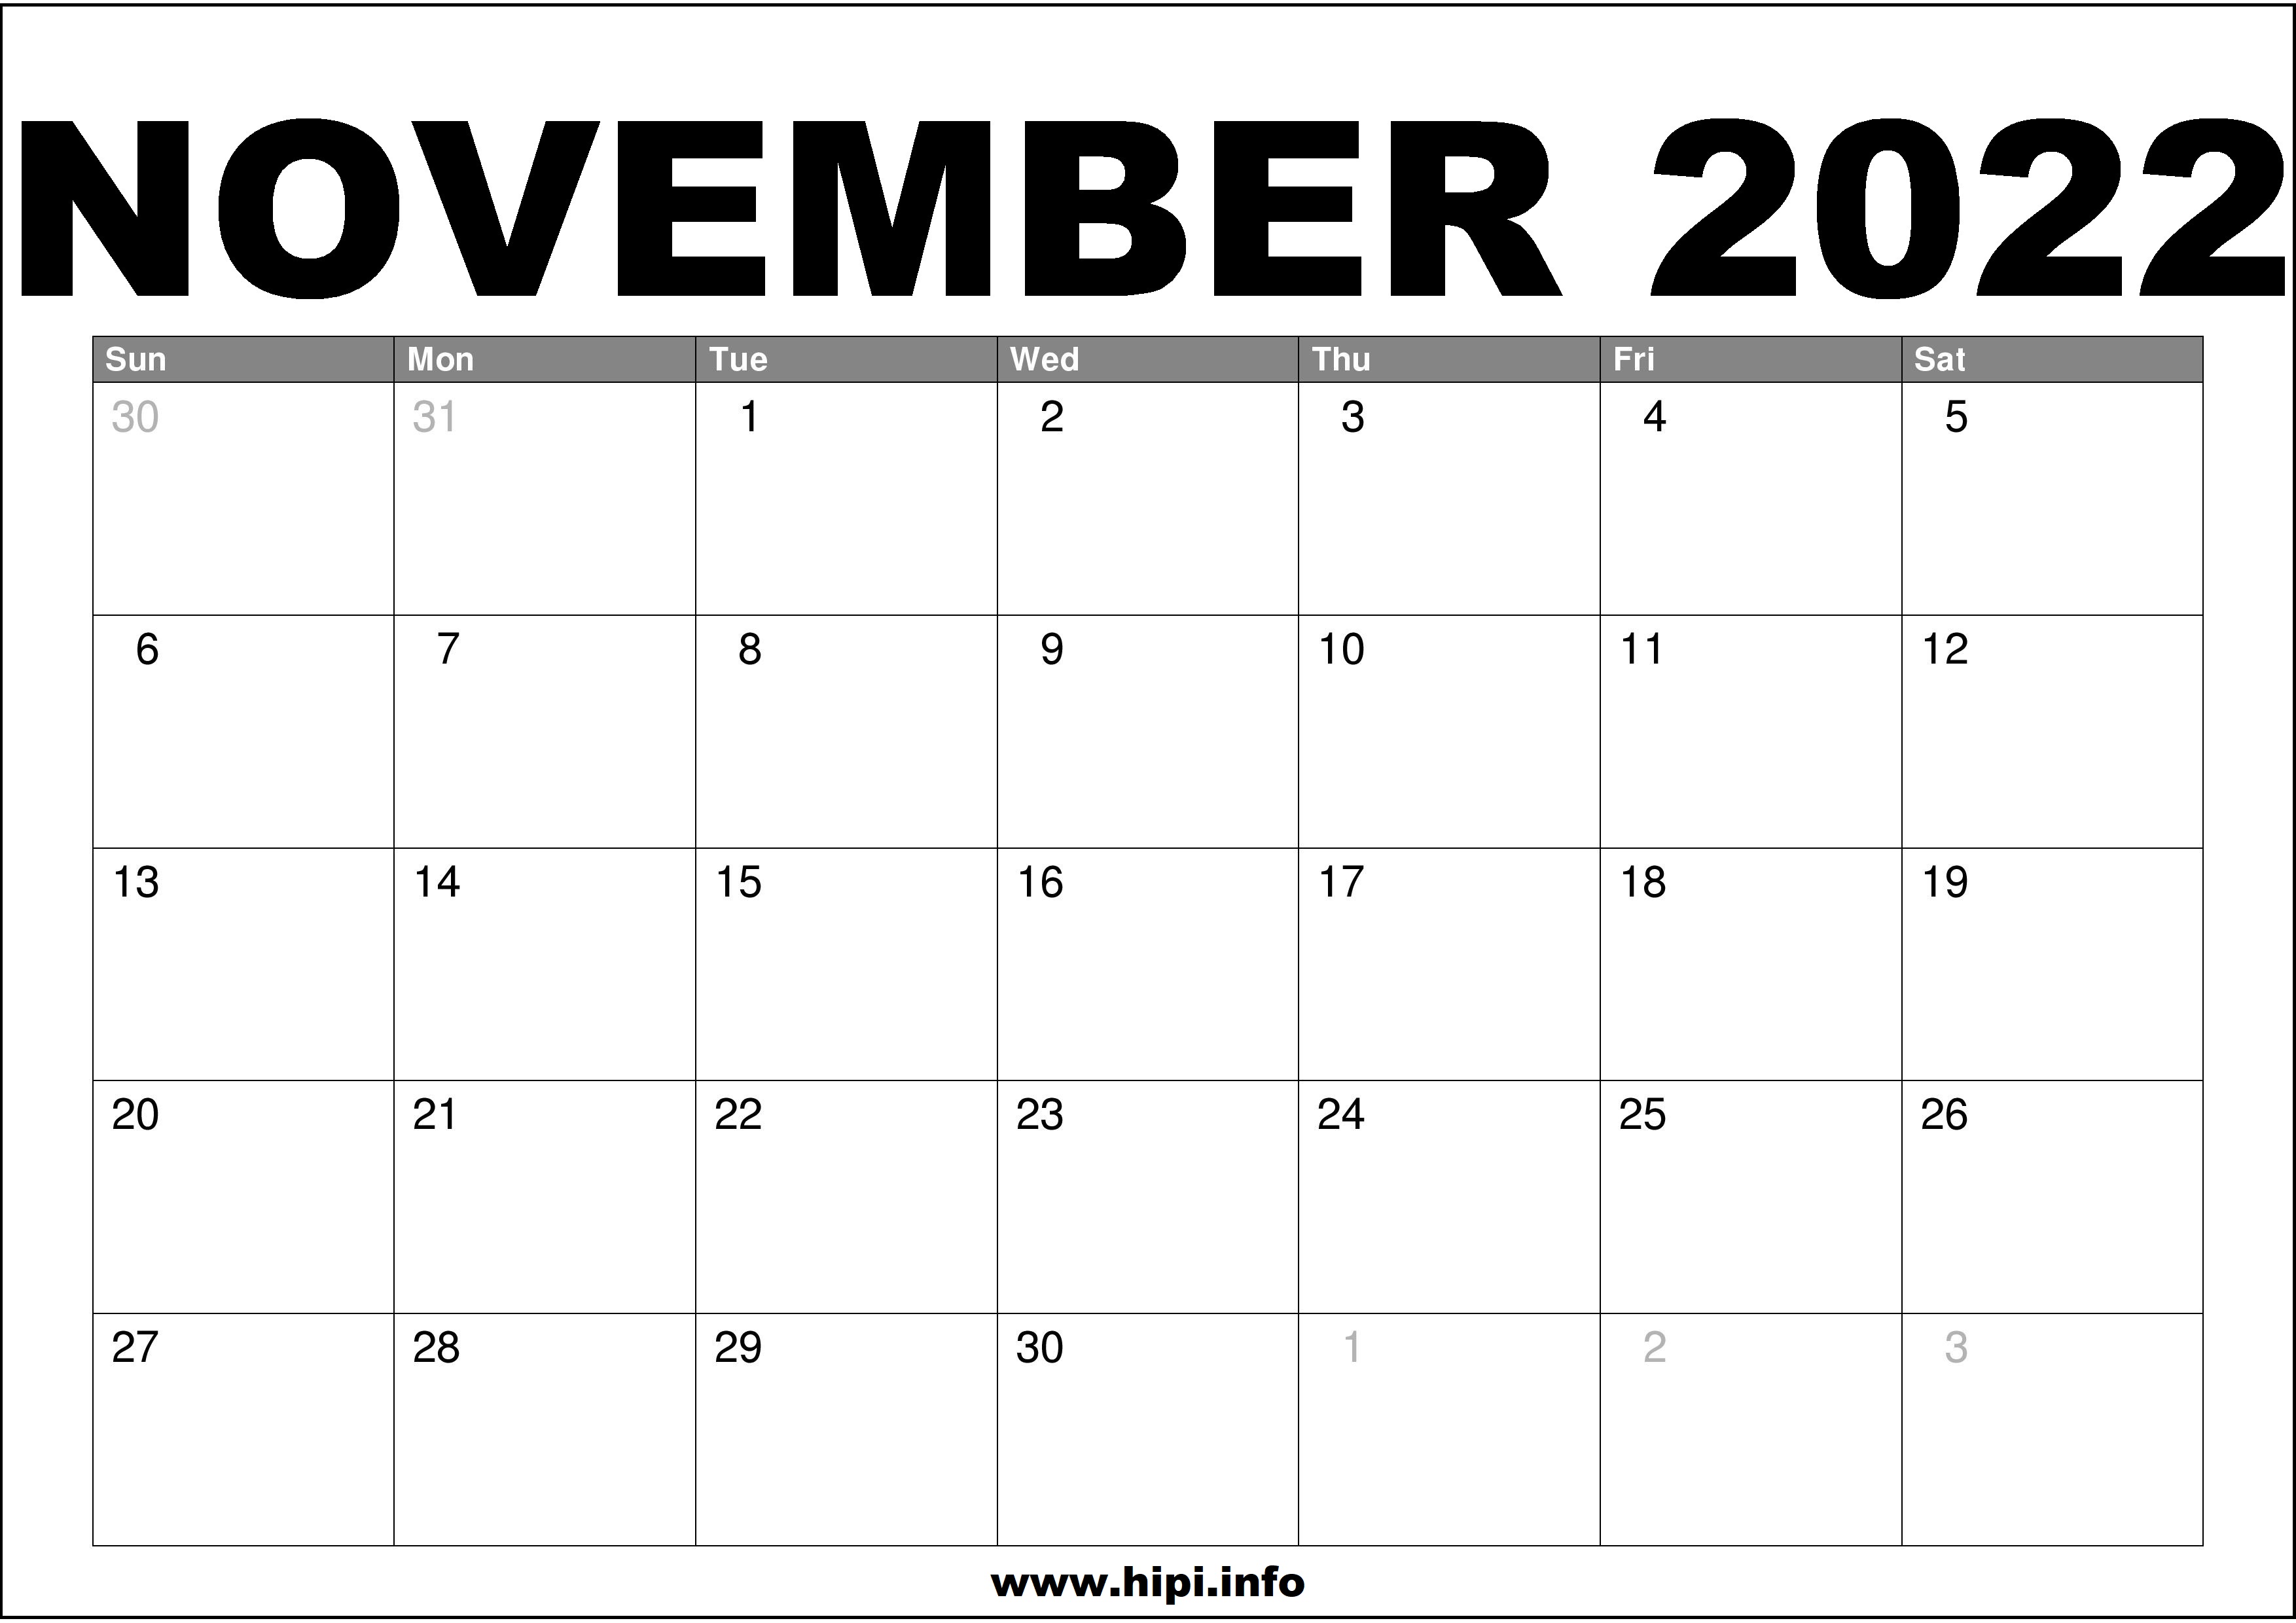 Free November 2022 Calendar November 2022 Calendar Printable Free - Hipi.info | Calendars Printable Free